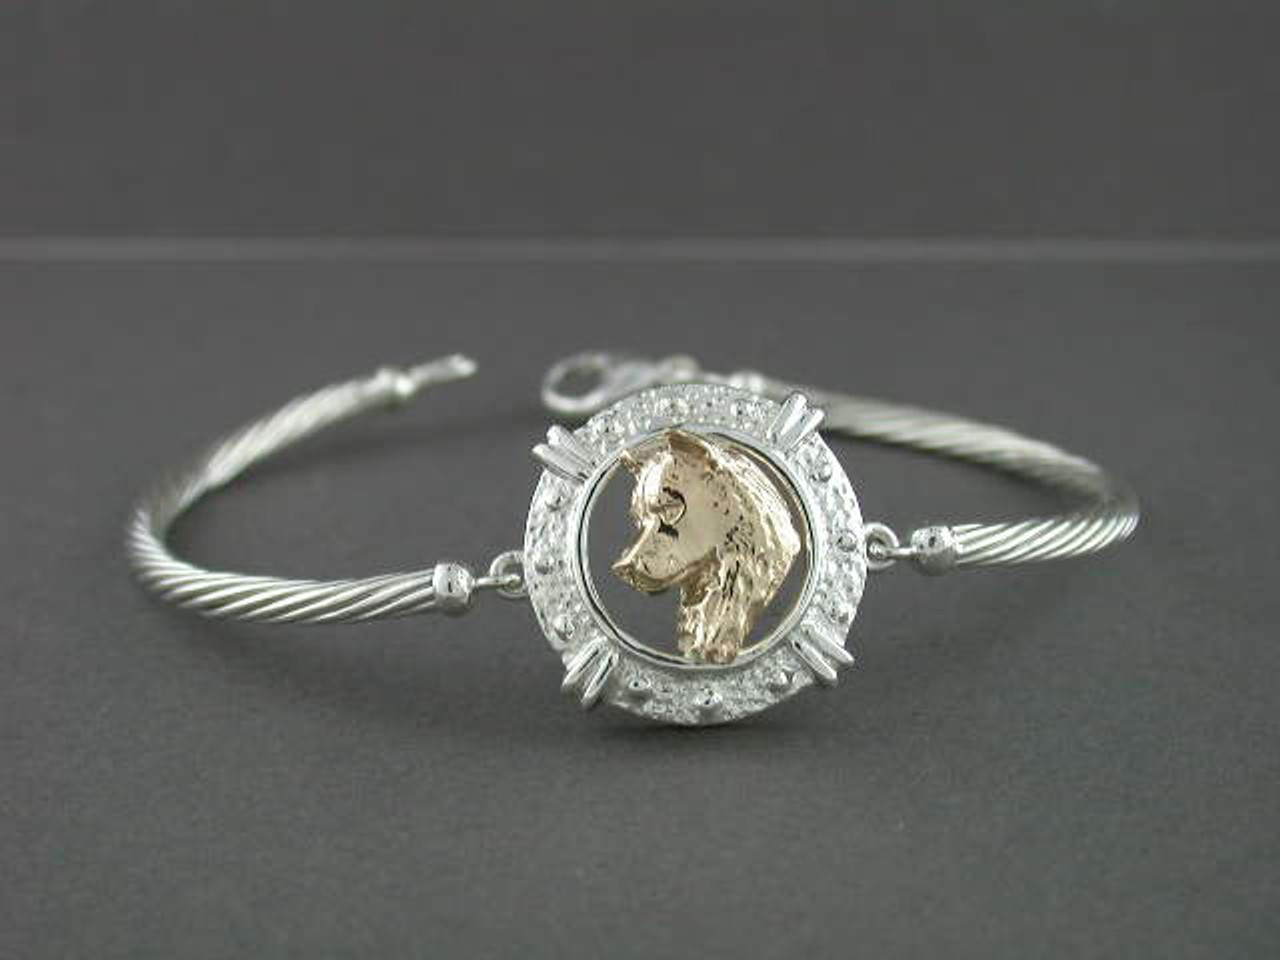 Bracelet Twisted Cable Cir Bead With Siberian Husky